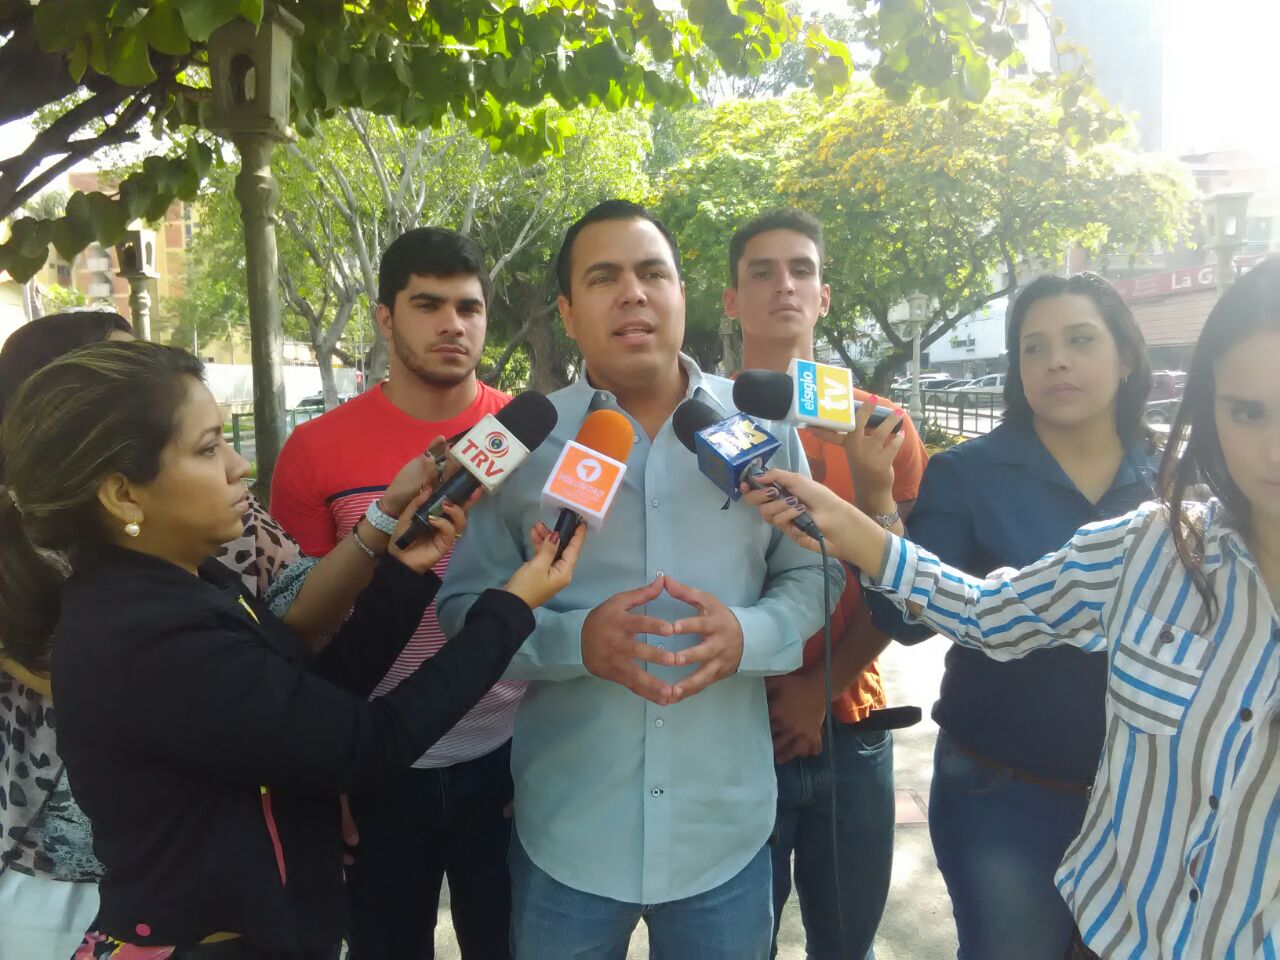 Alcalde chavista de Maracay se “pelotea” sus responsabilidades